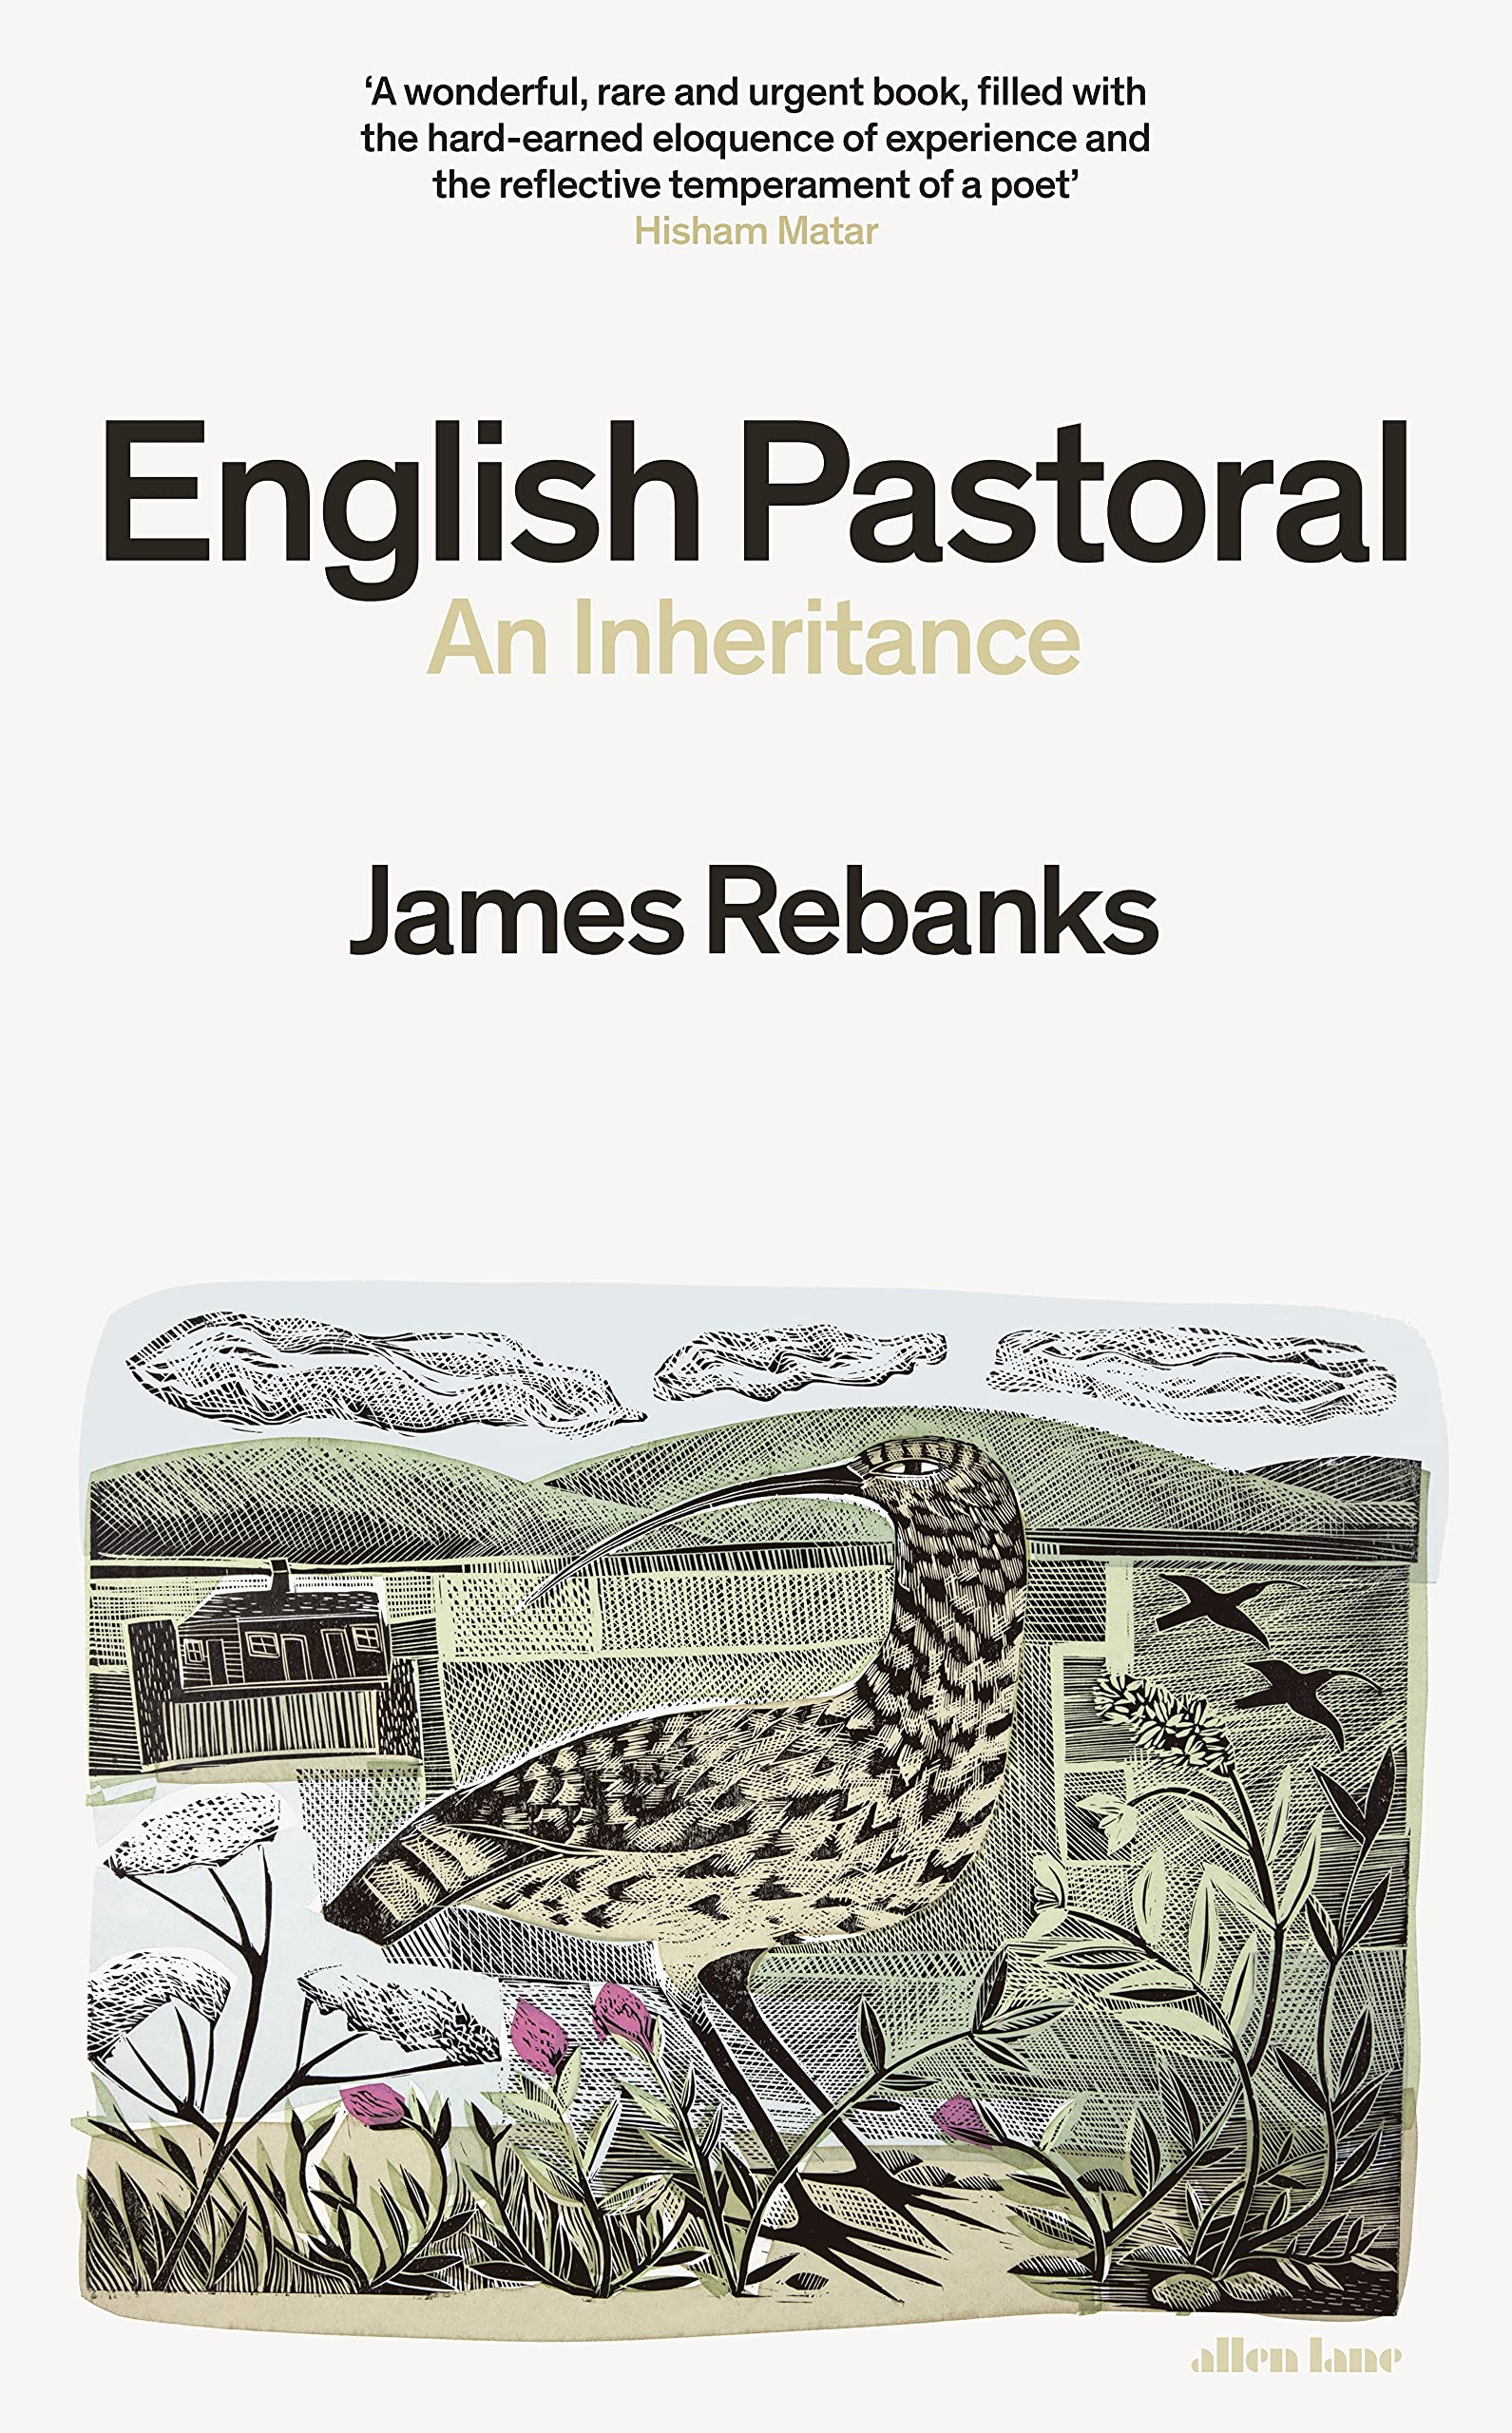 James Rebanks: English Pastoral (2020, Penguin Books, Limited)